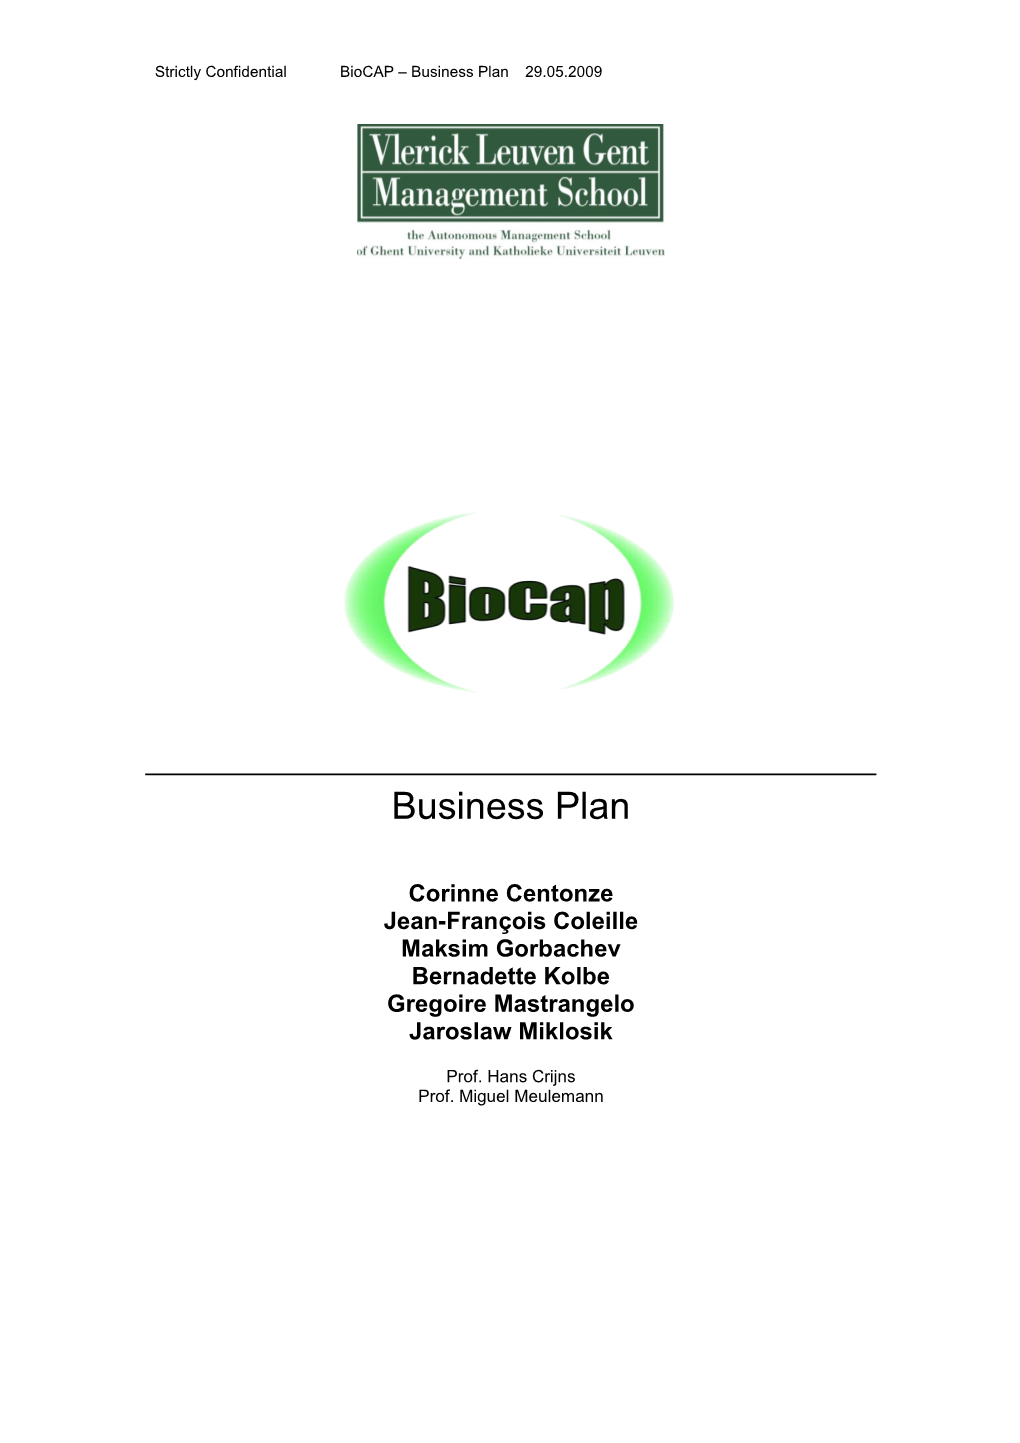 Strictly Confidential Biocap Business Plan 29.05.2009